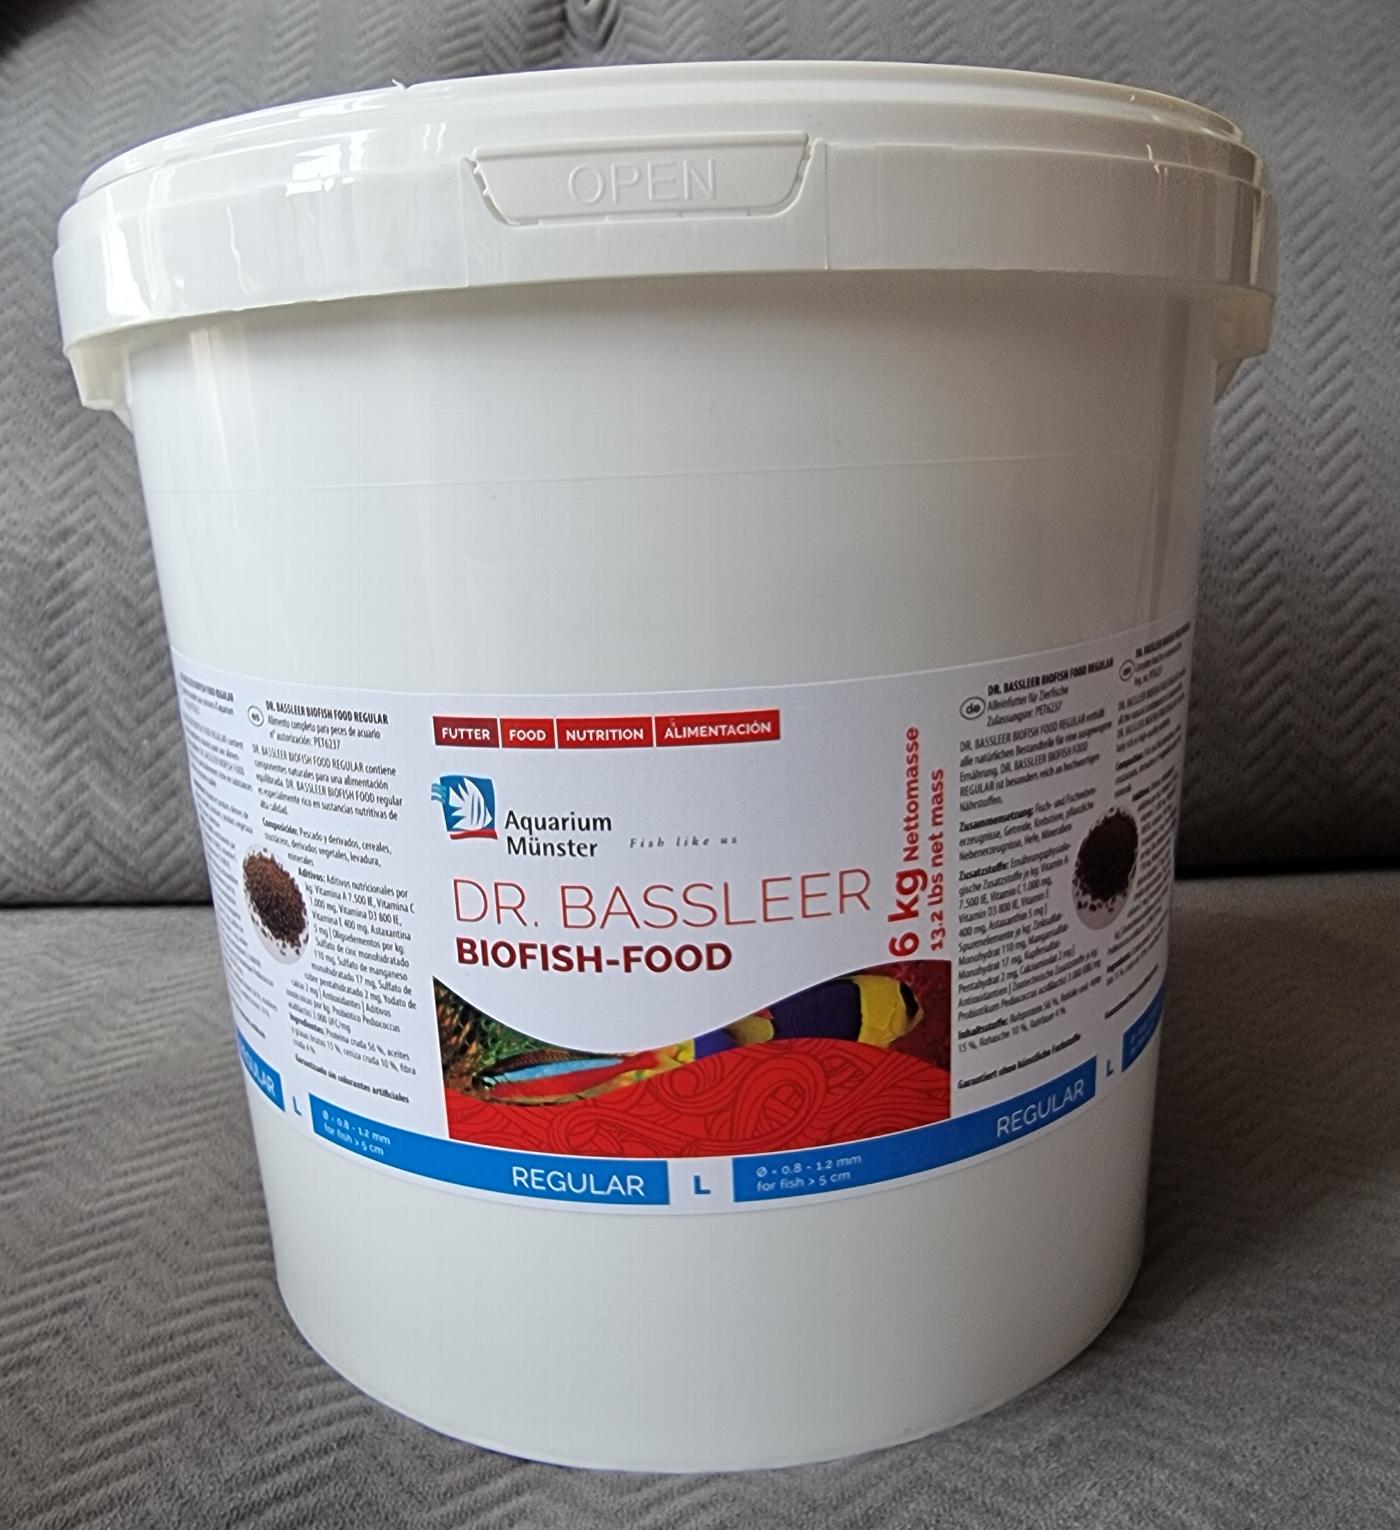 Dr. Bassleer Biofish-Food 6kg bucket 
Regular and Green